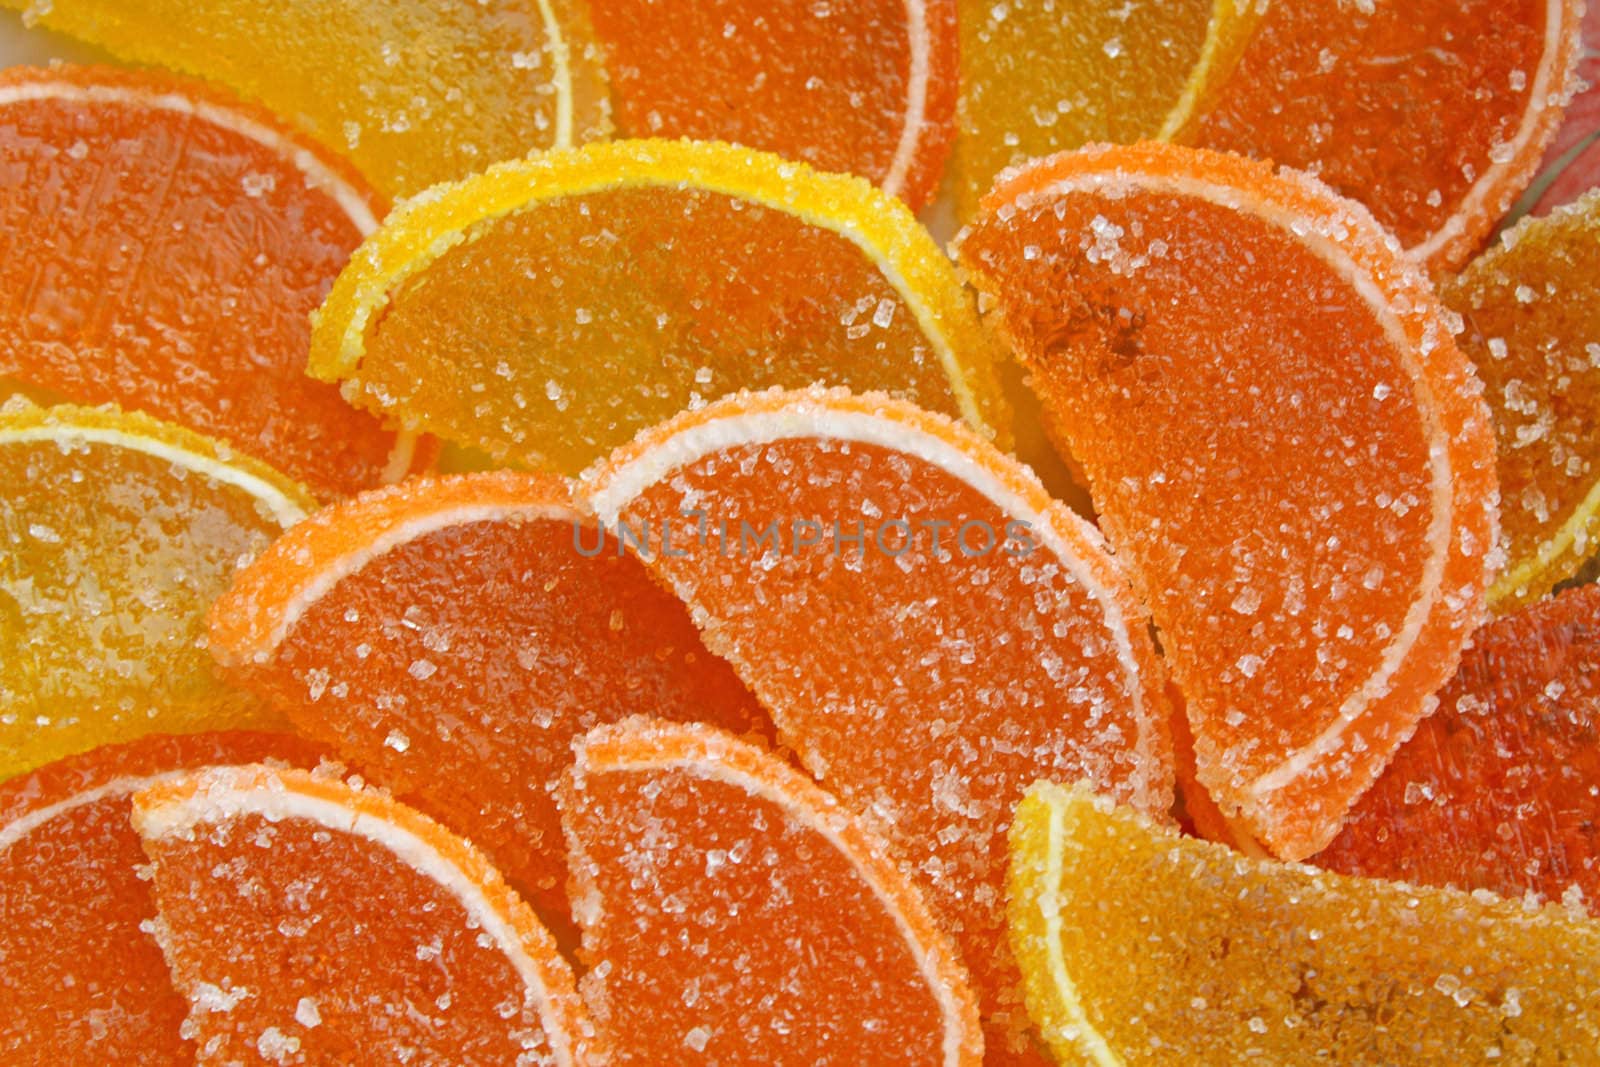 Close up of the orange and lemon sweet slices.